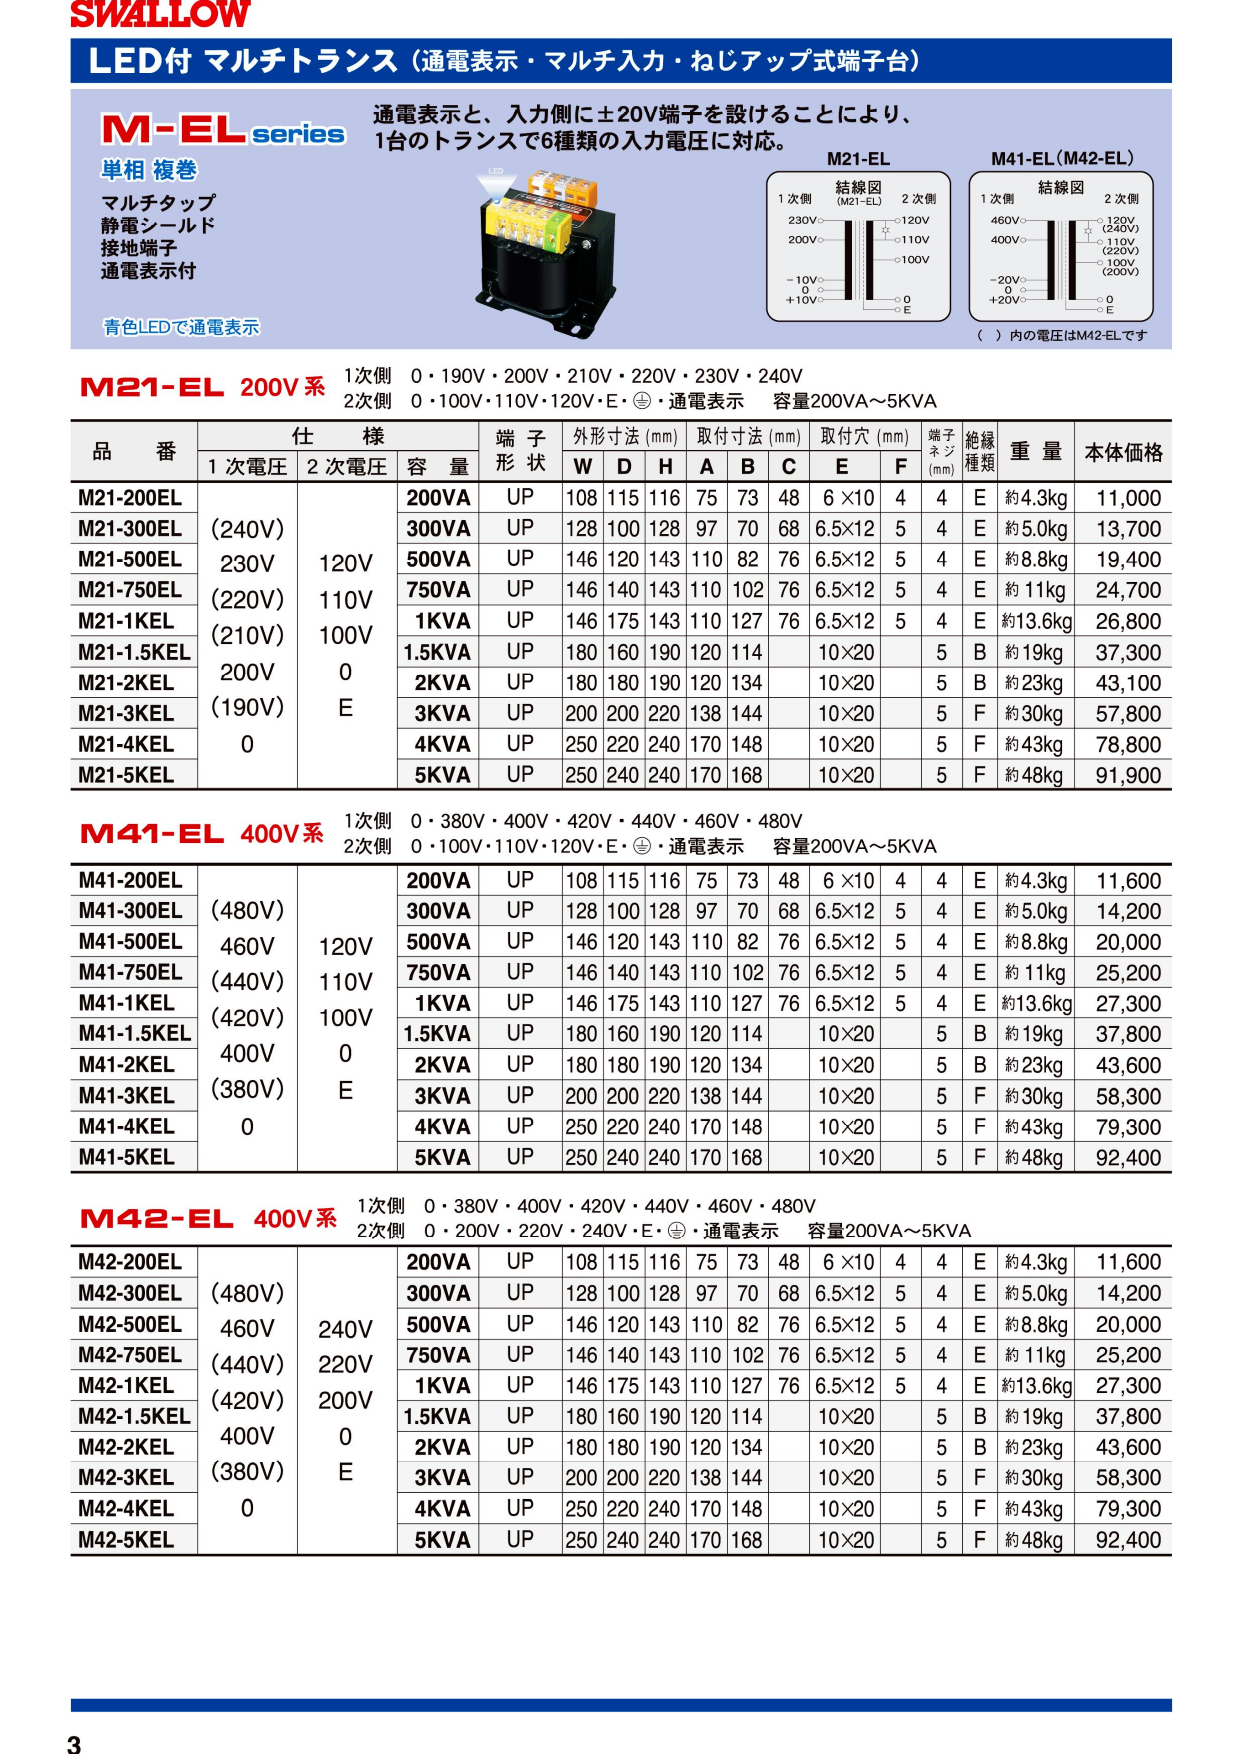 LED付マルチトランスM-ELシリーズ（スワロー電機株式会社）のカタログ無料ダウンロード｜製造業向けカタログポータル Aperza